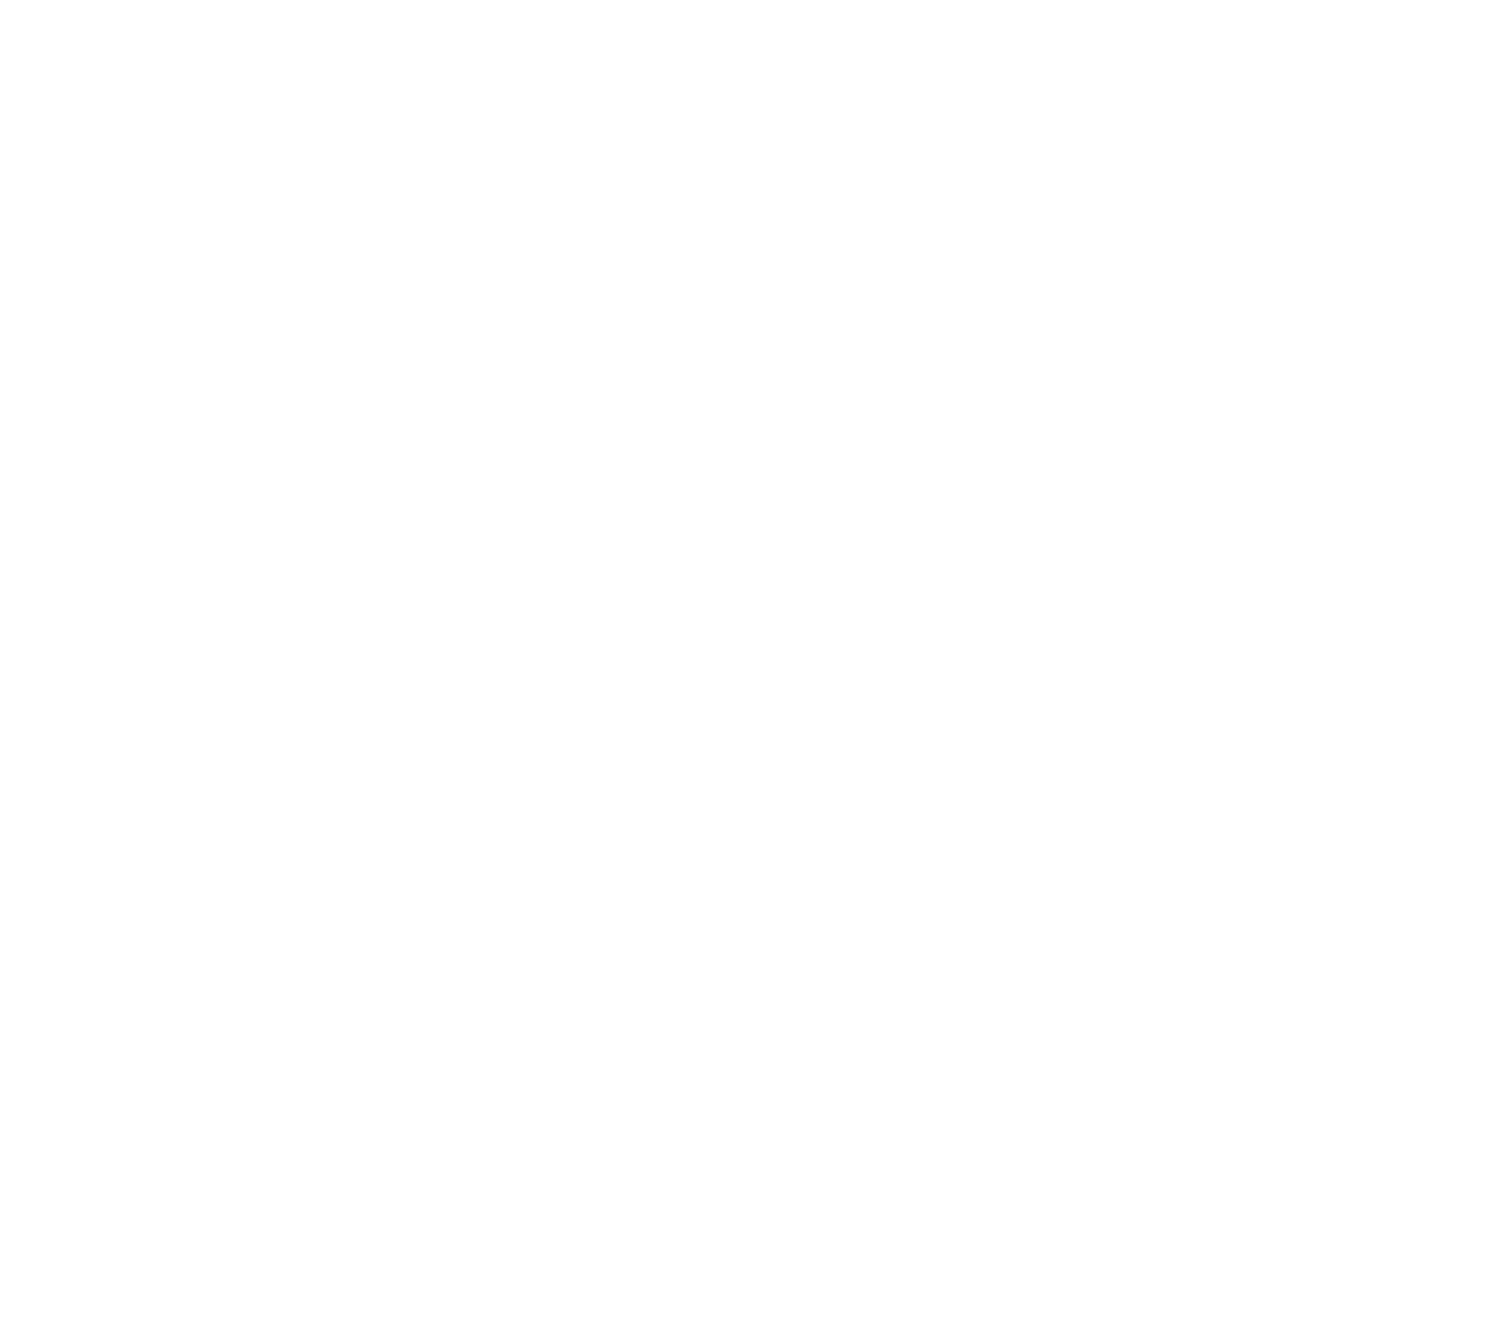 Always Keen Productions